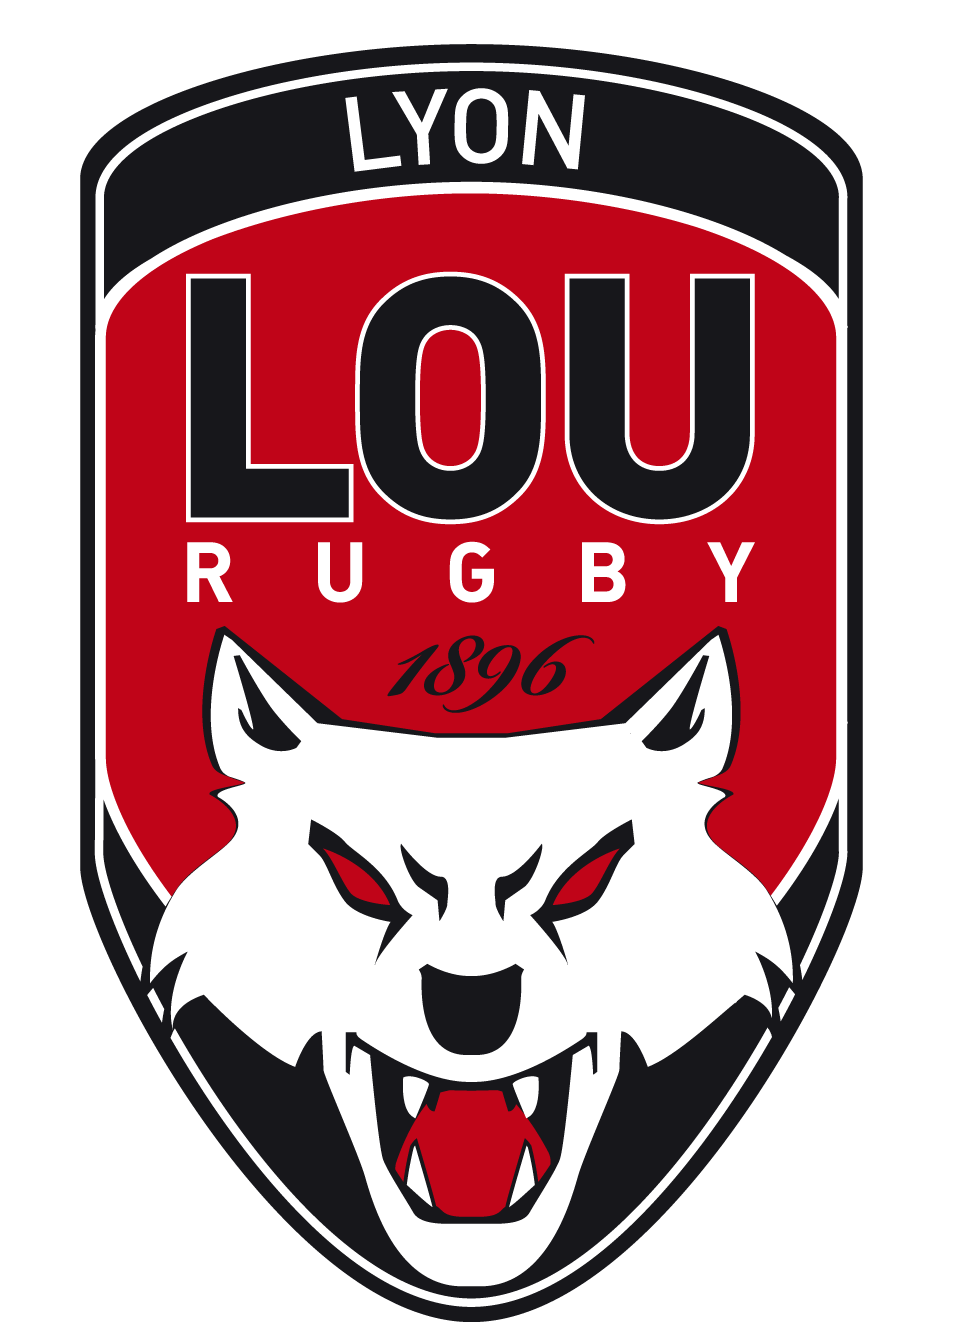 Lyon LOU Rugby Logo transparent PNG.